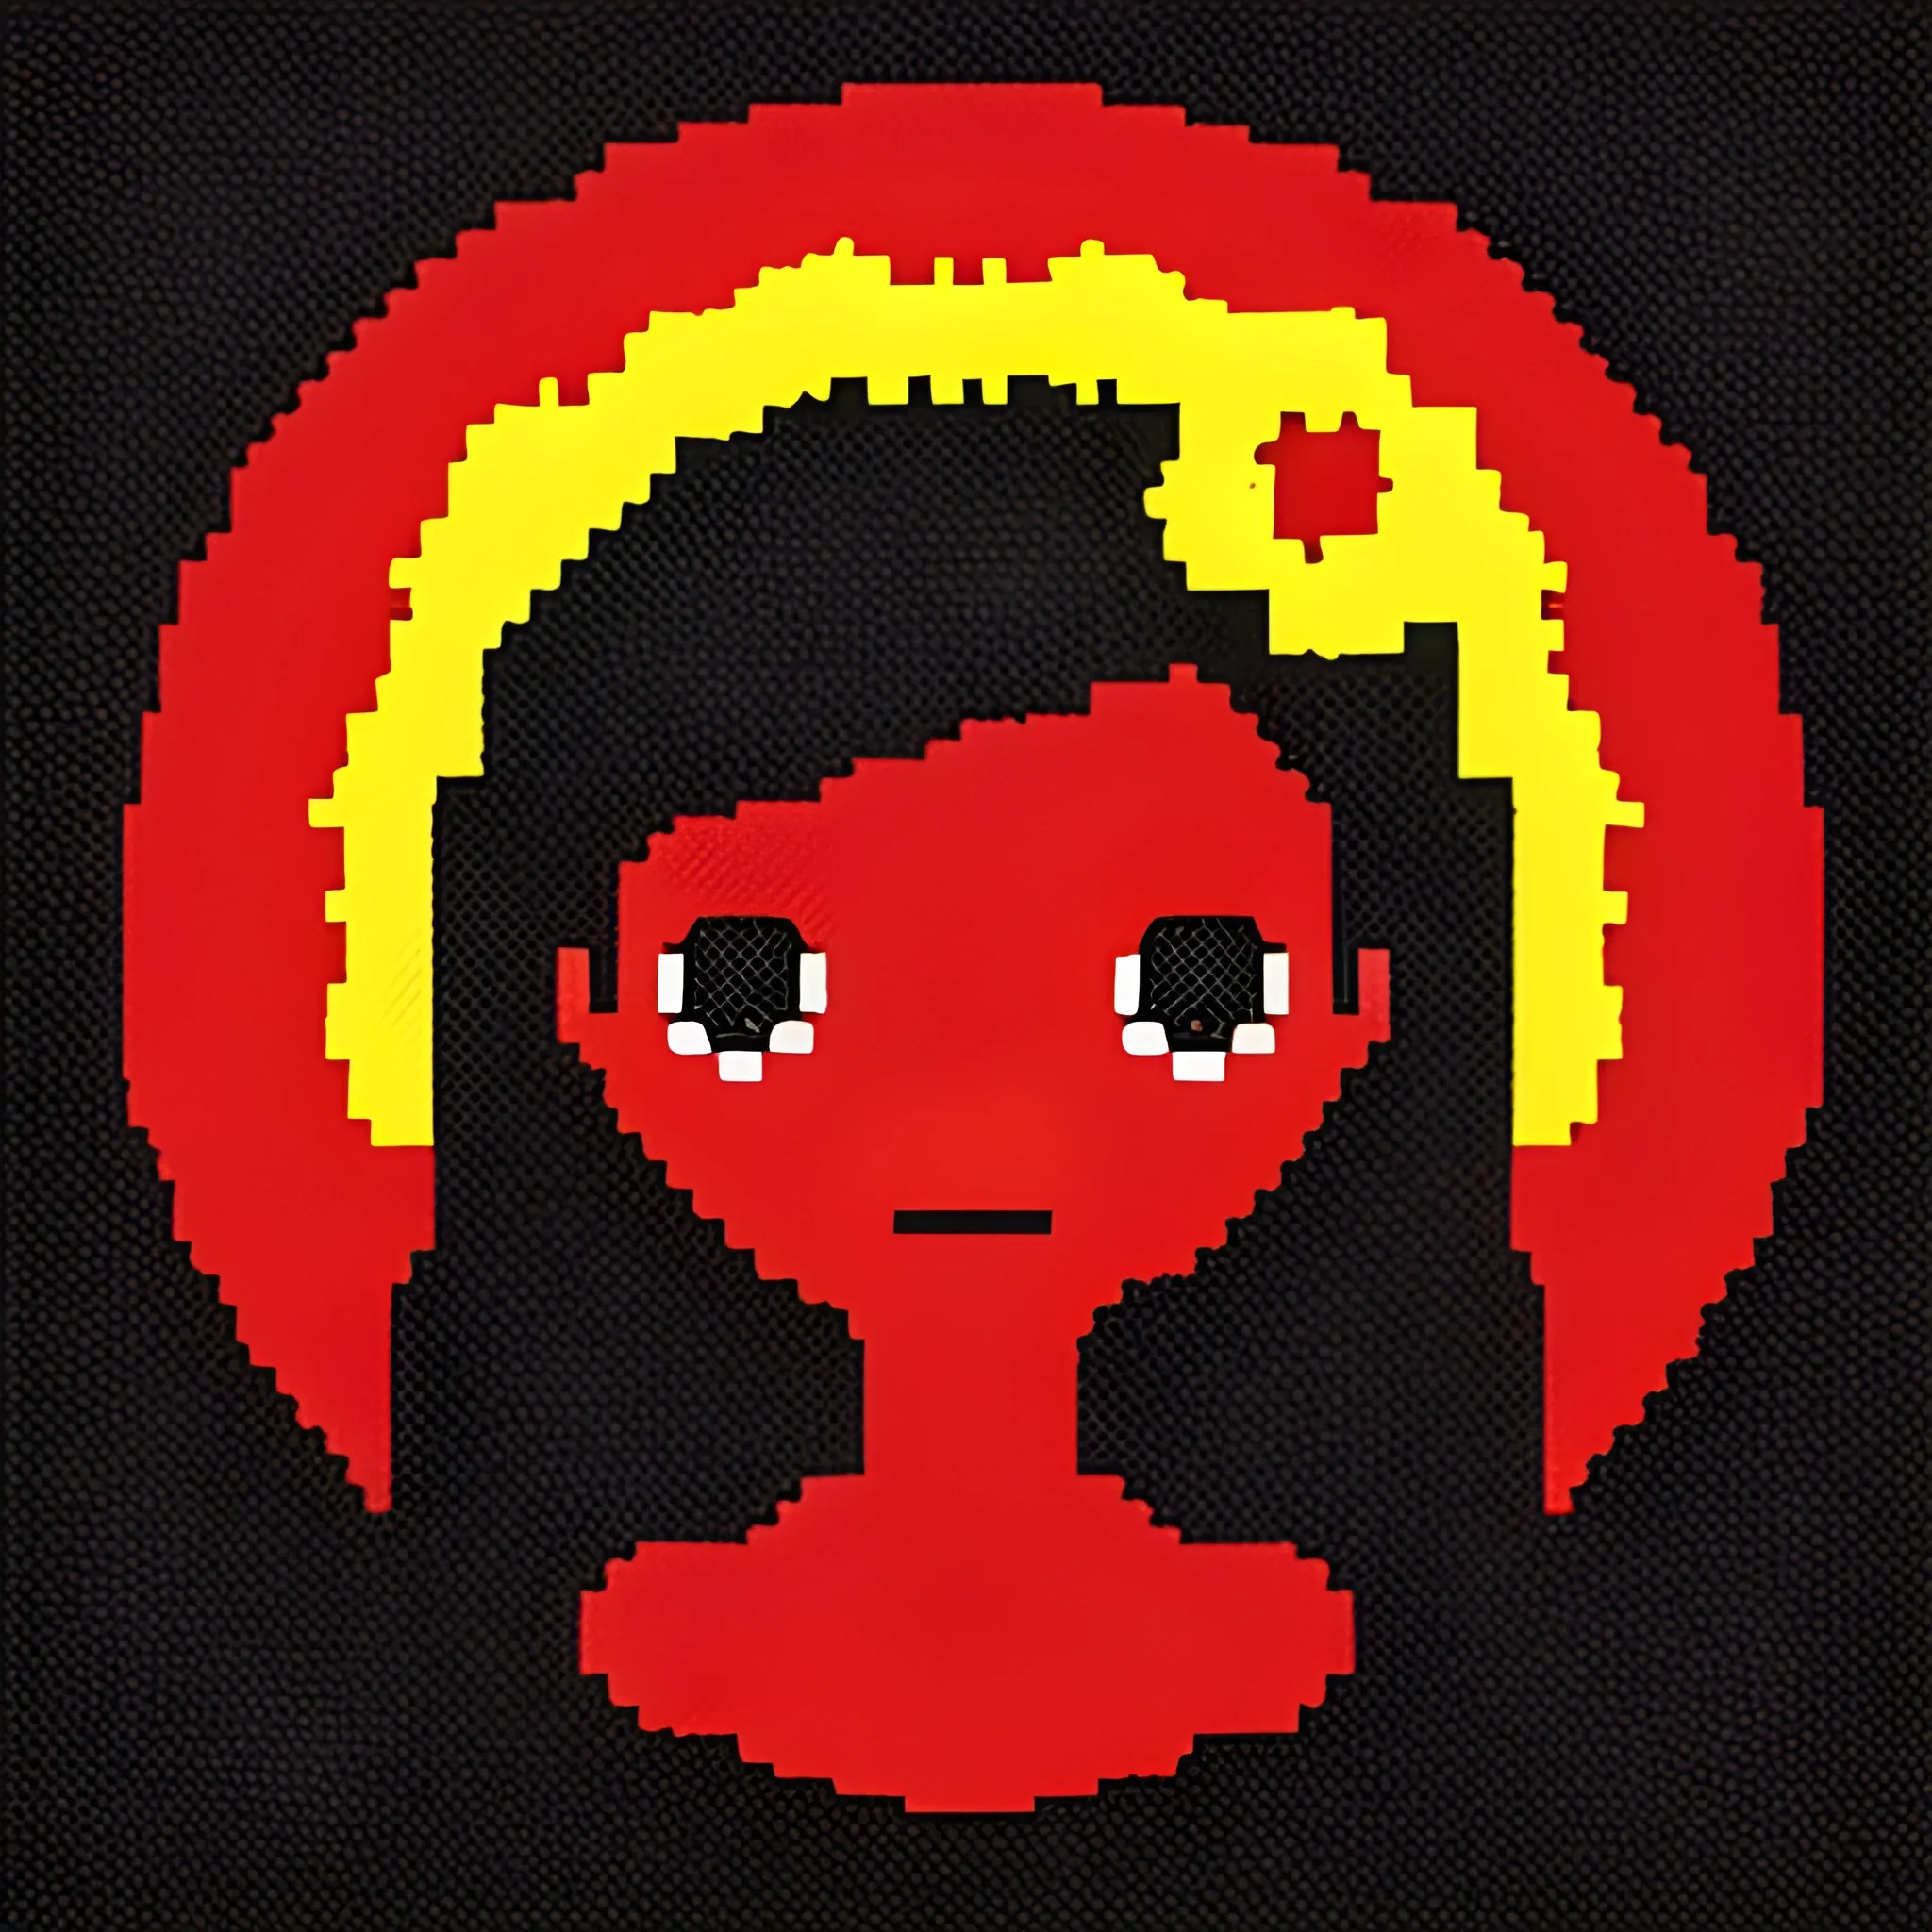 alien con una flor roja marchita, imagen en pixeles